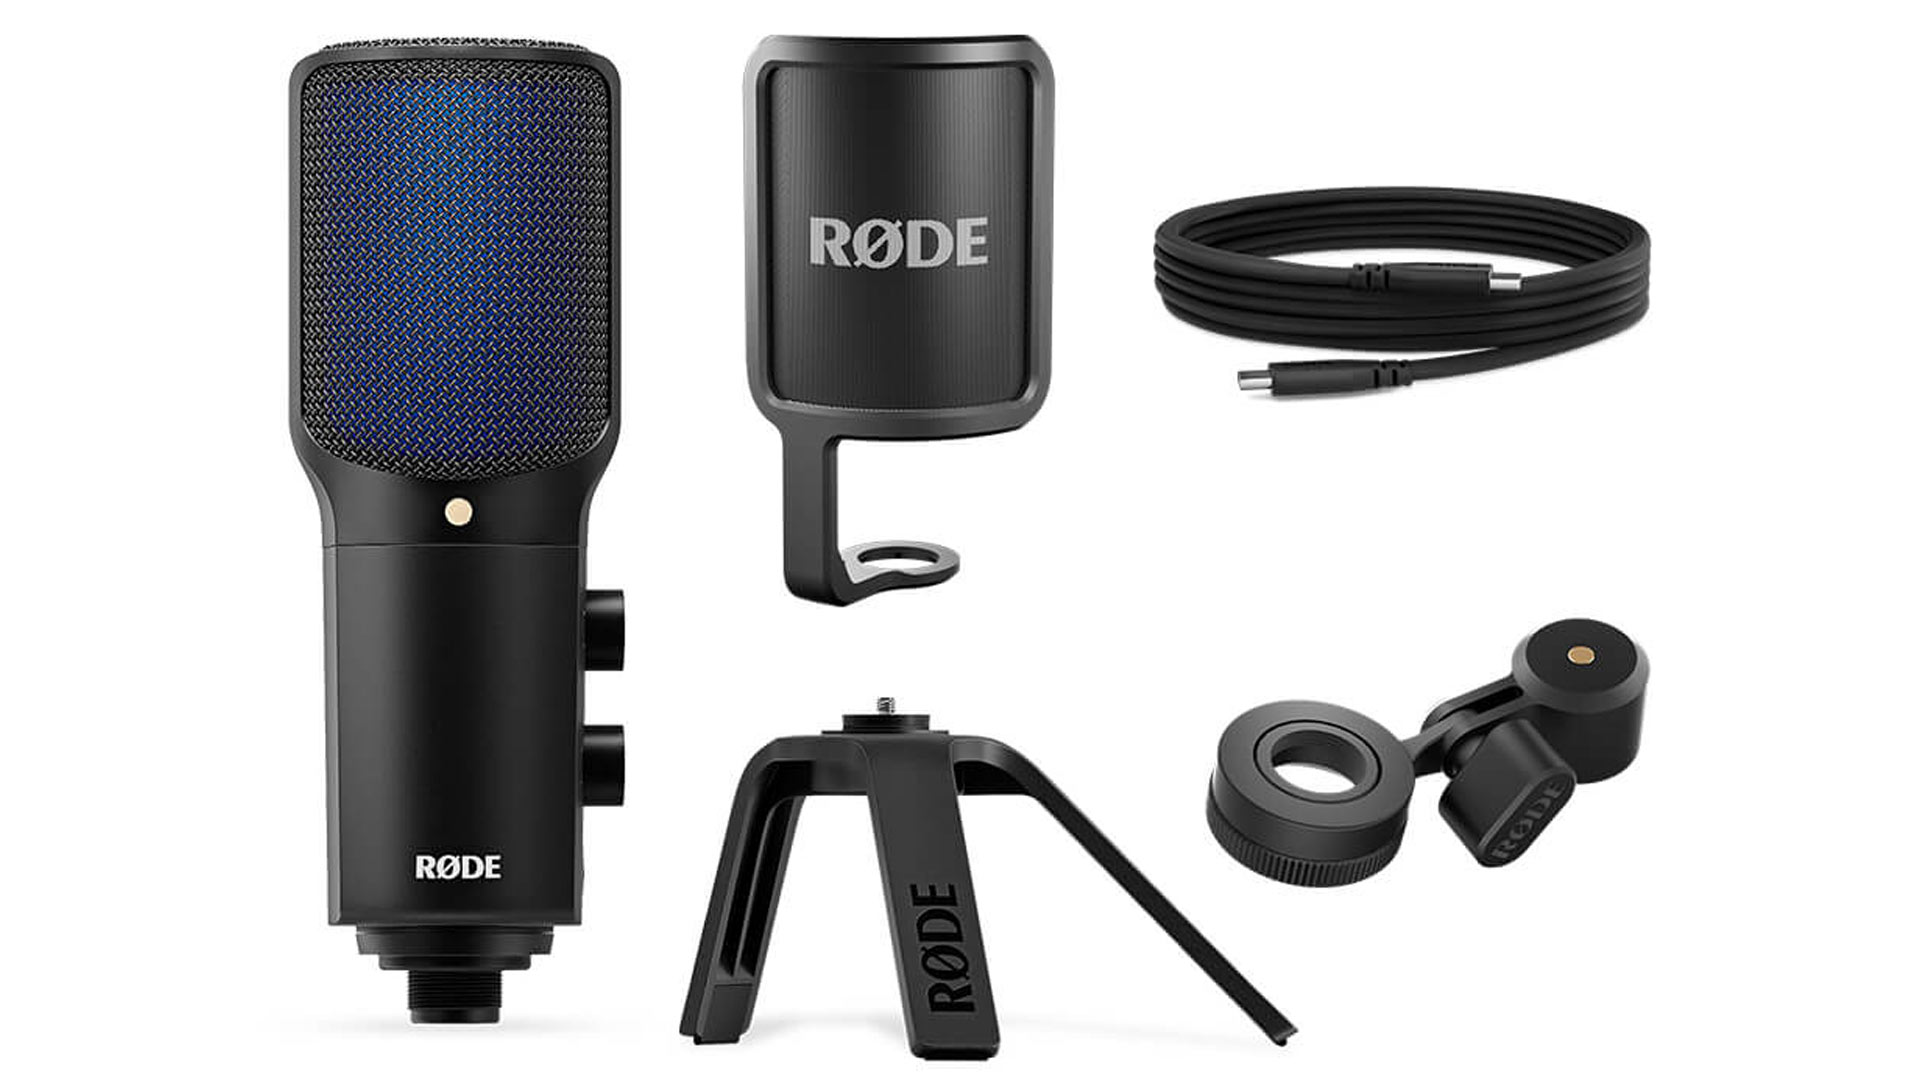 RØDEがNT-USB+を発表 - プロフェッショナル向けUSBコンデンサーマイク 